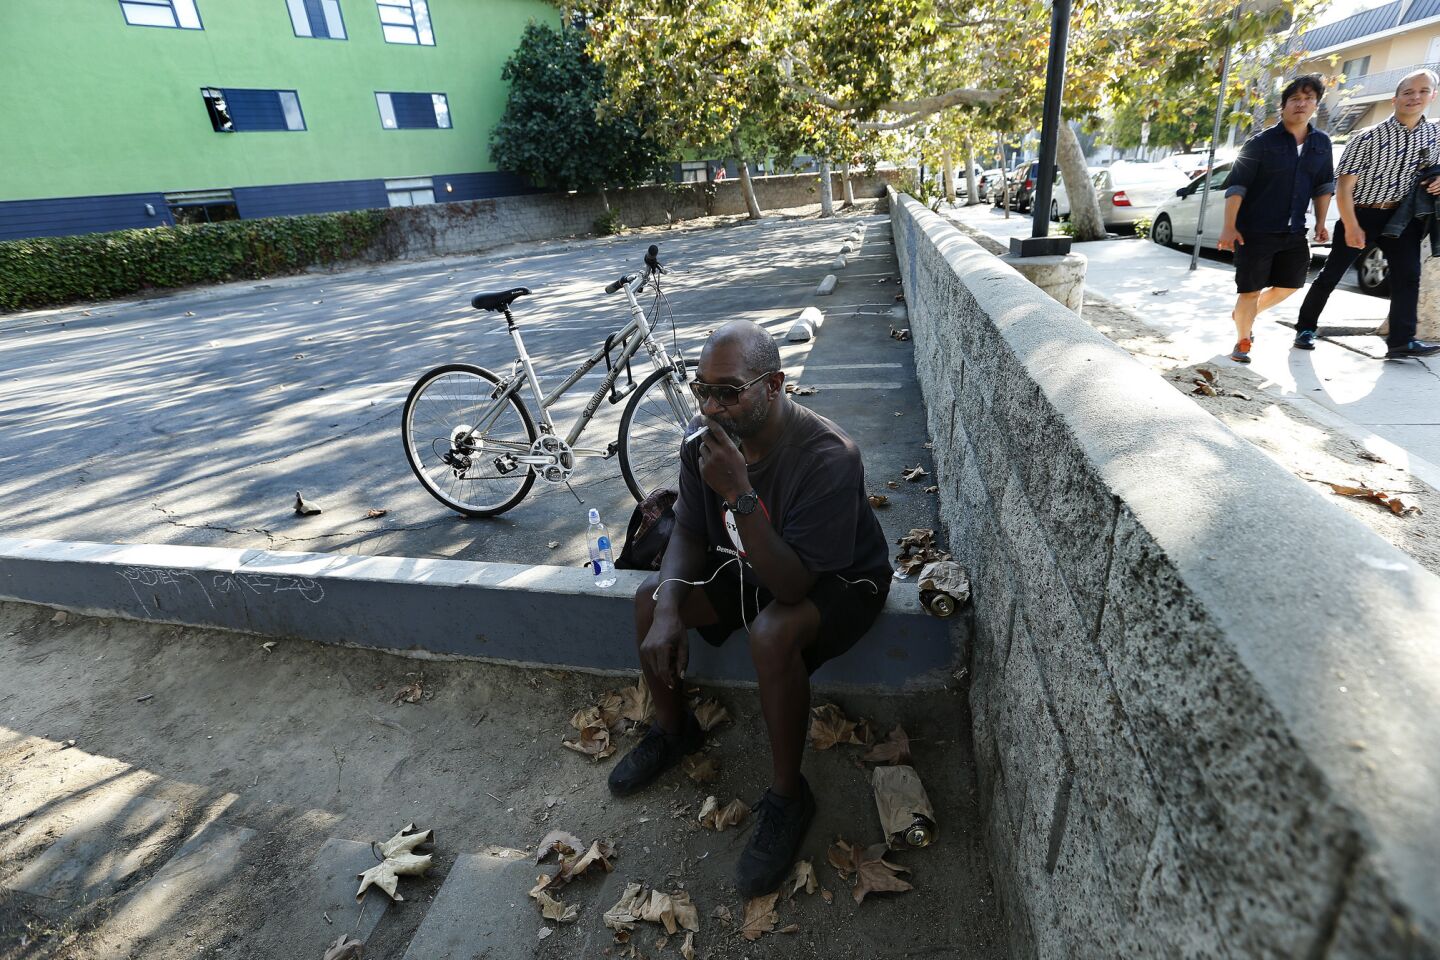 Homelessness in Venice